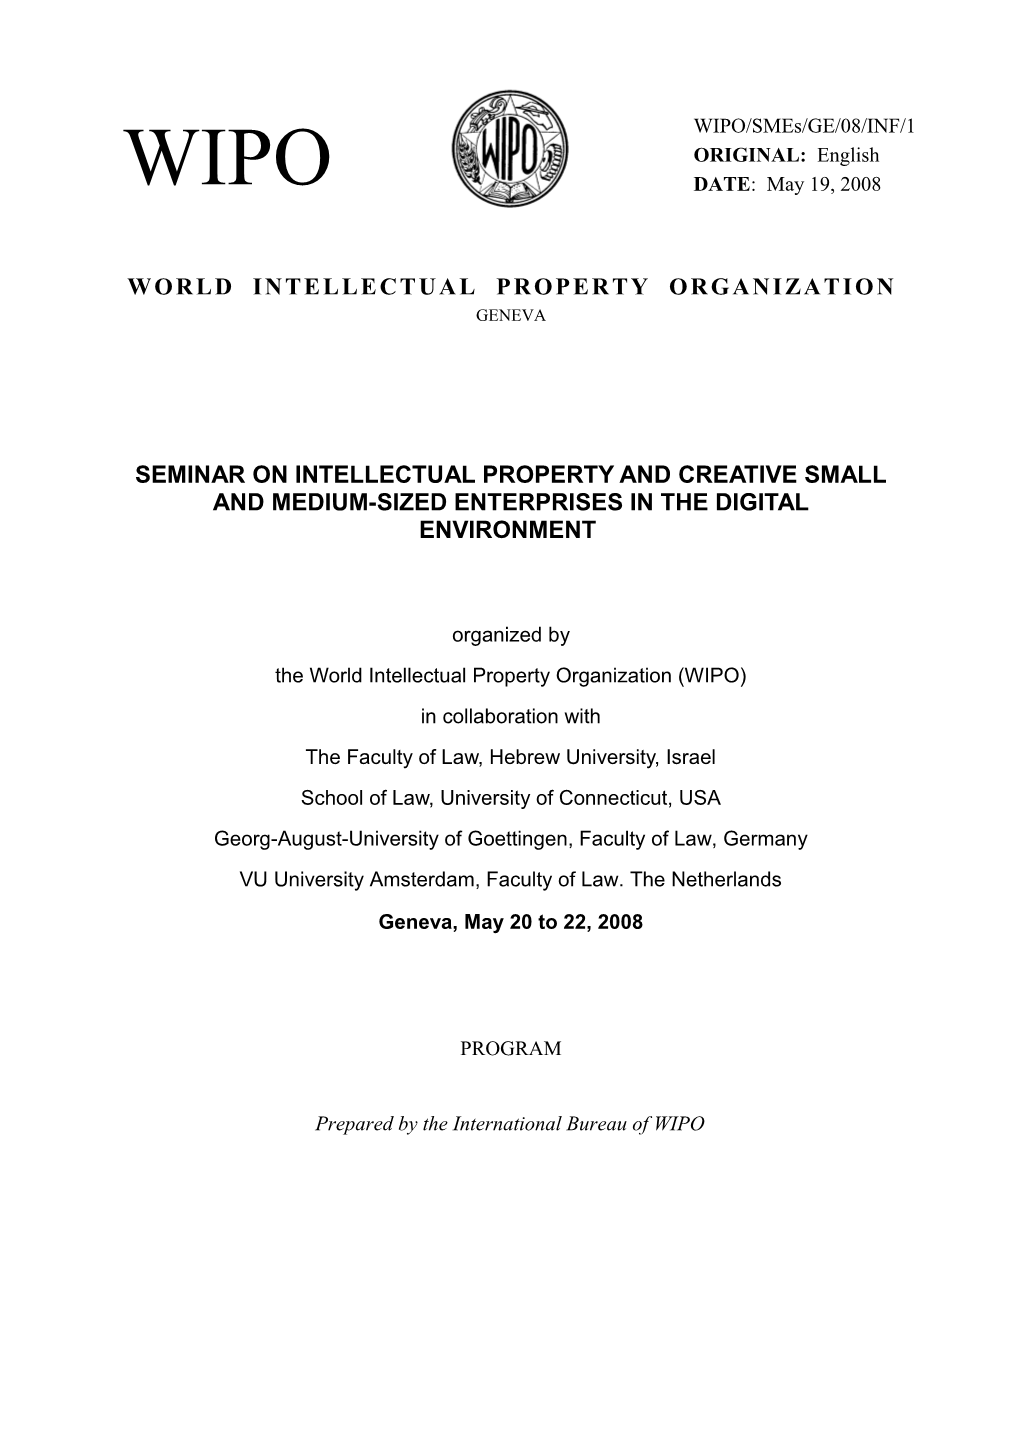 WIPO/SMES/GE/07/INF/1 PROV.: Provisional Program